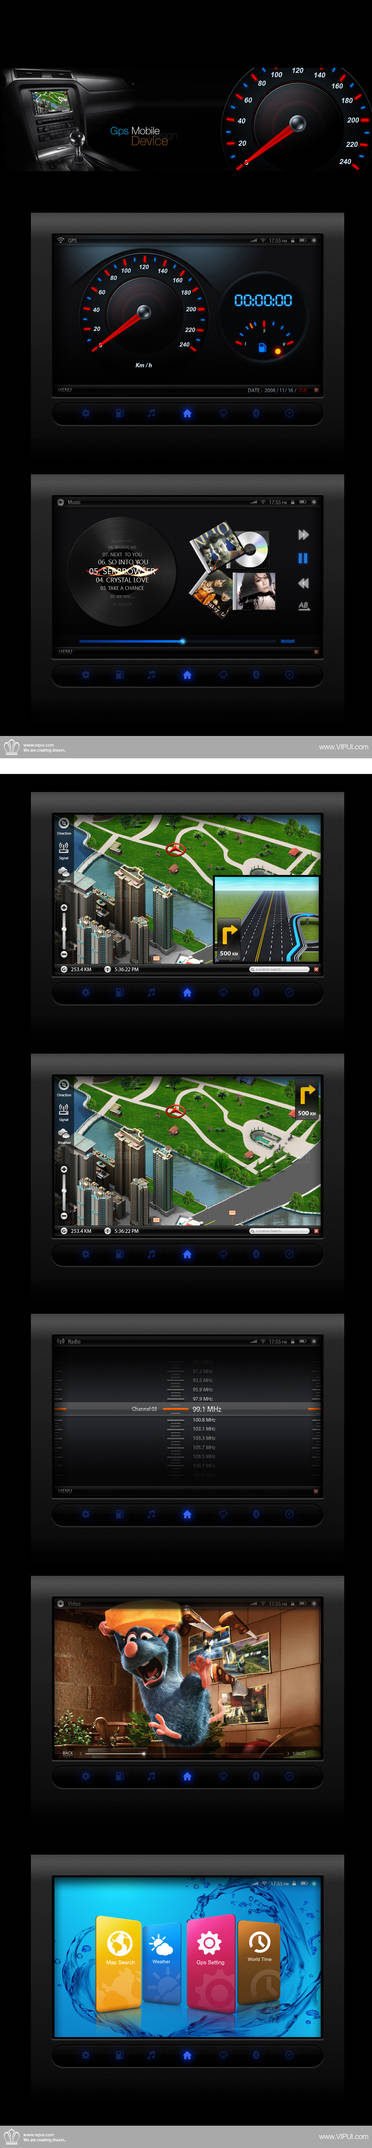 Car mobile navigation devices